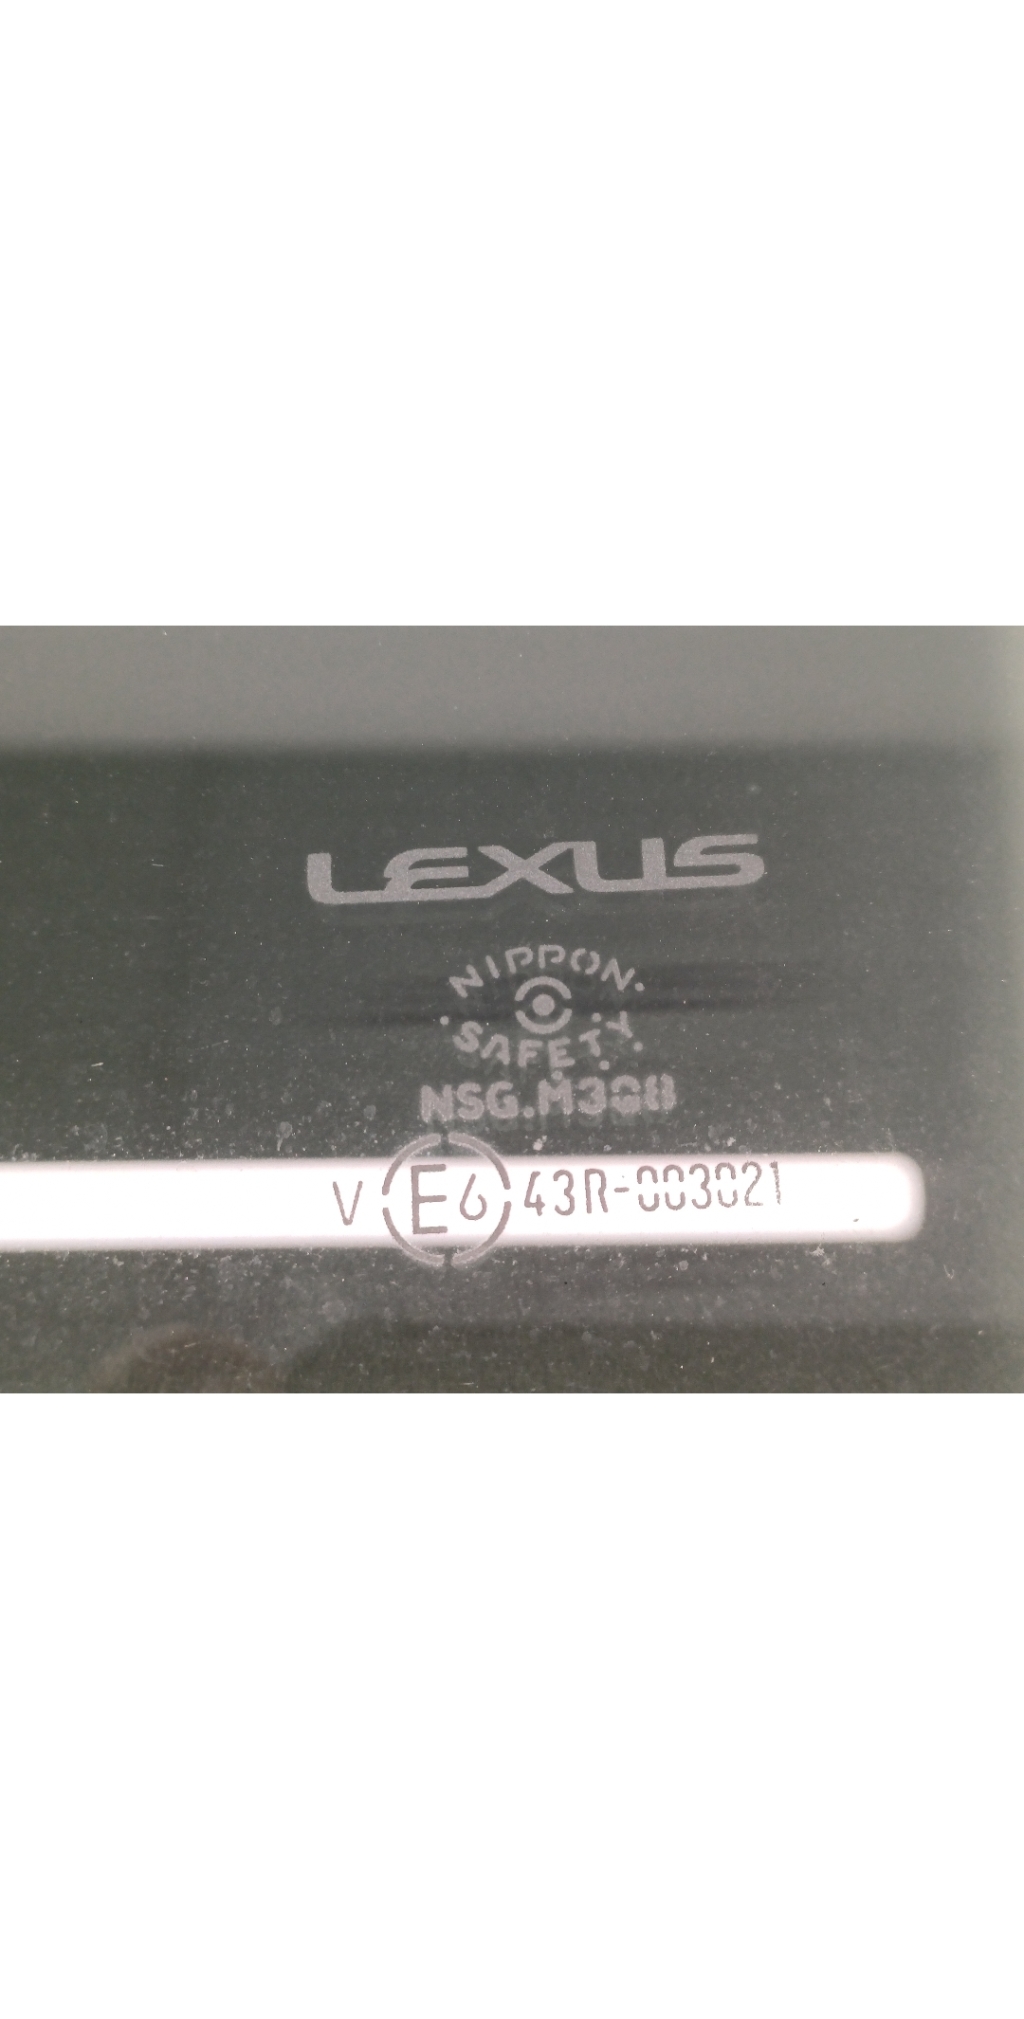 LEXUS UX 1 generation (2018-2023) Vasemman puolen liukuoven lasi 43R-003021 24292290